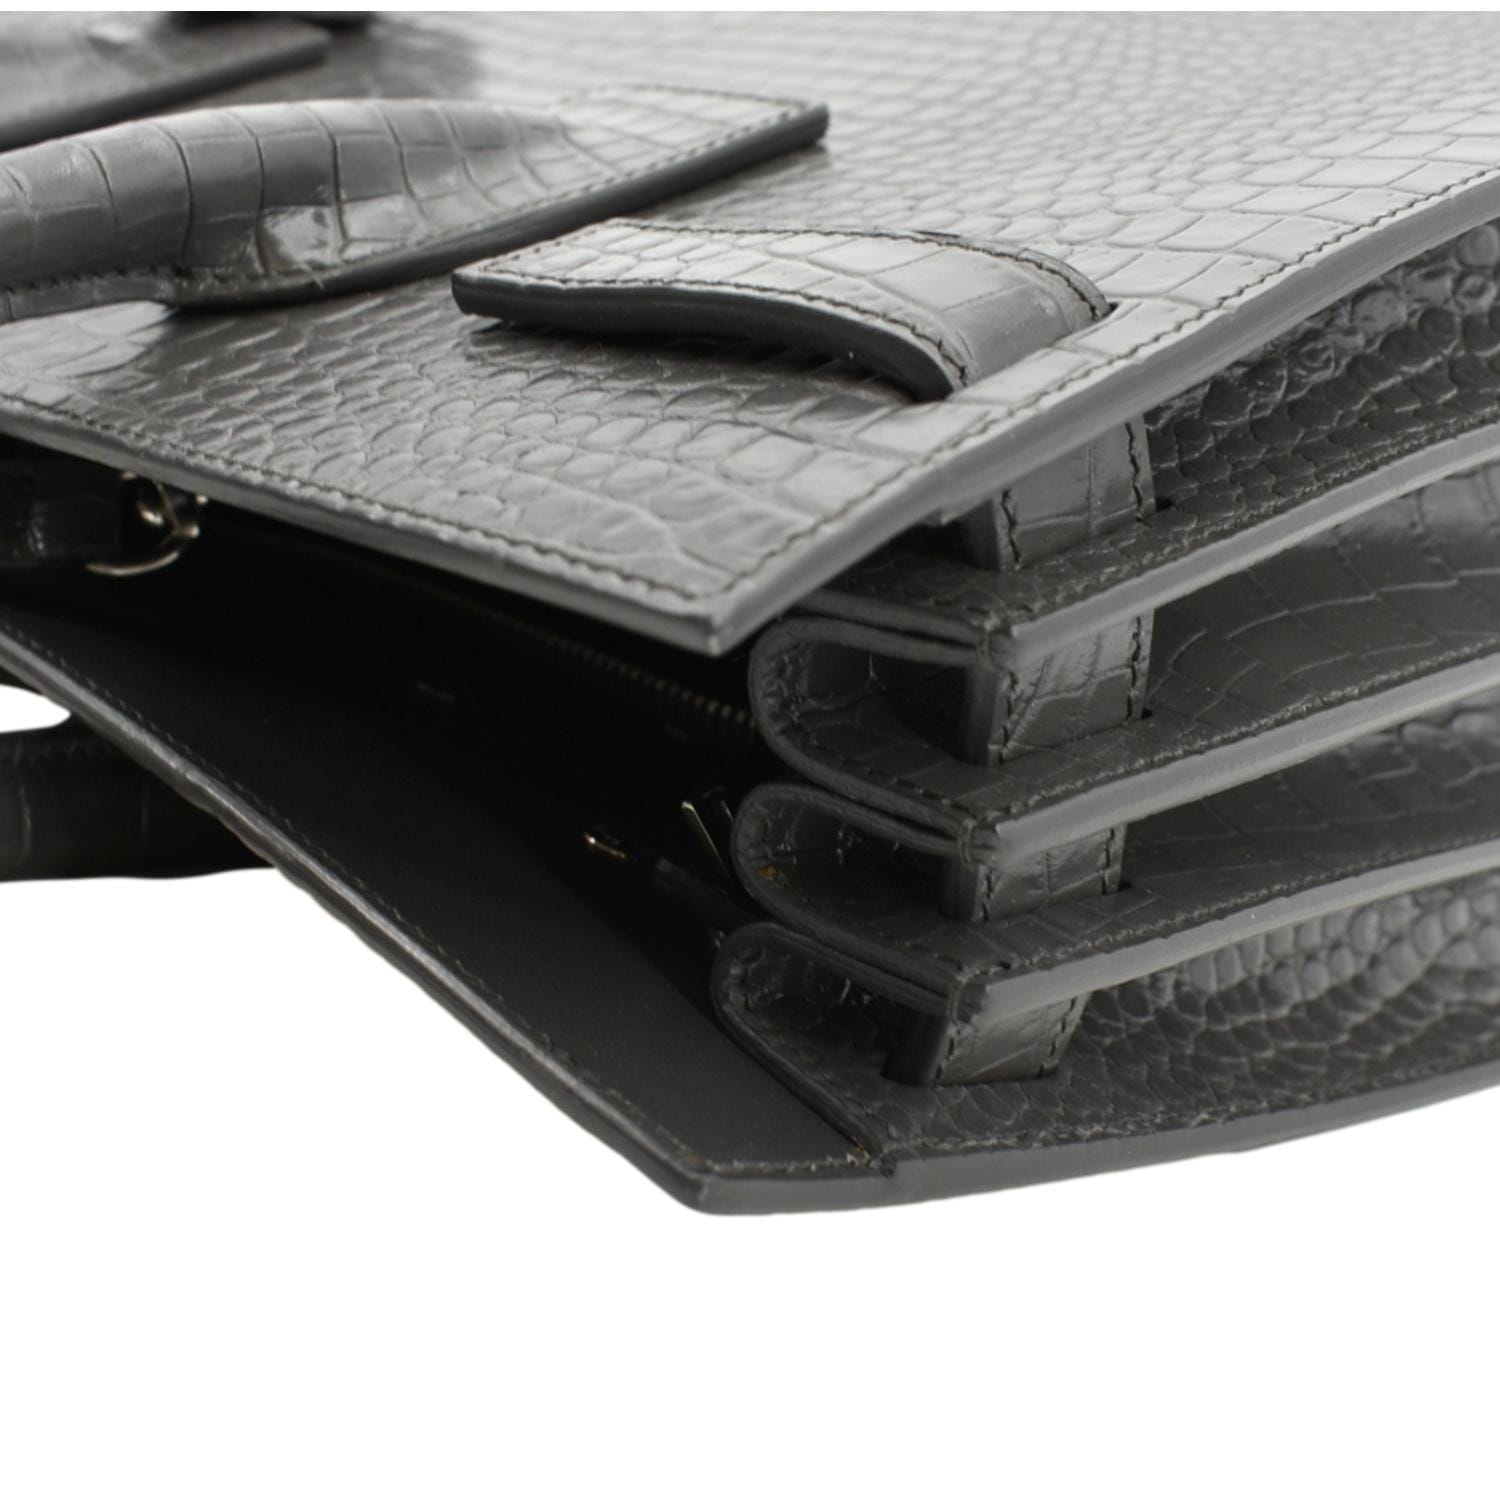 sac de jour large in crocodile-embossed leather